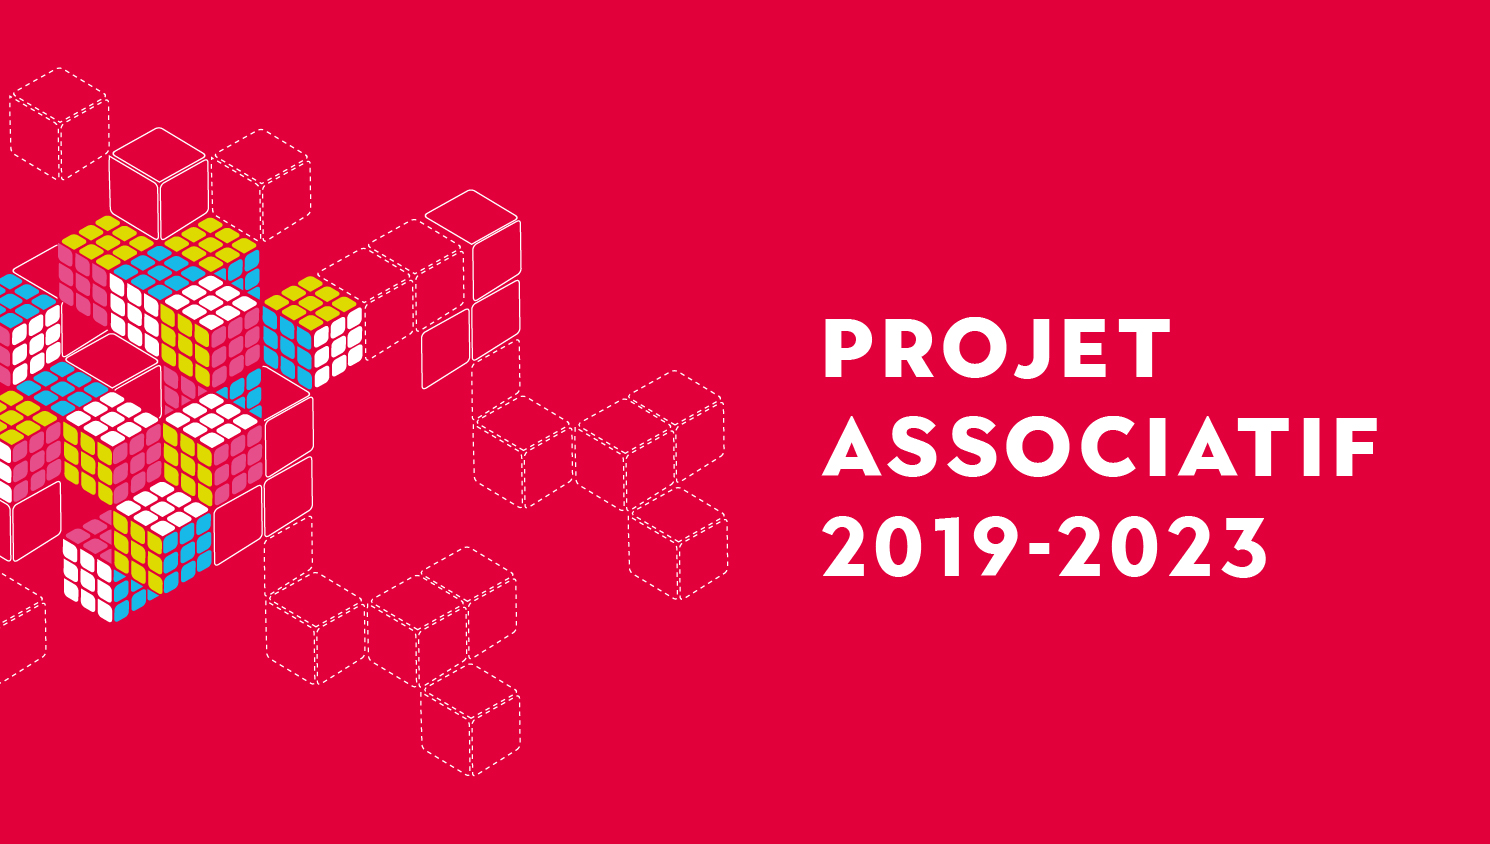 Projet associatif 2019 - 2023